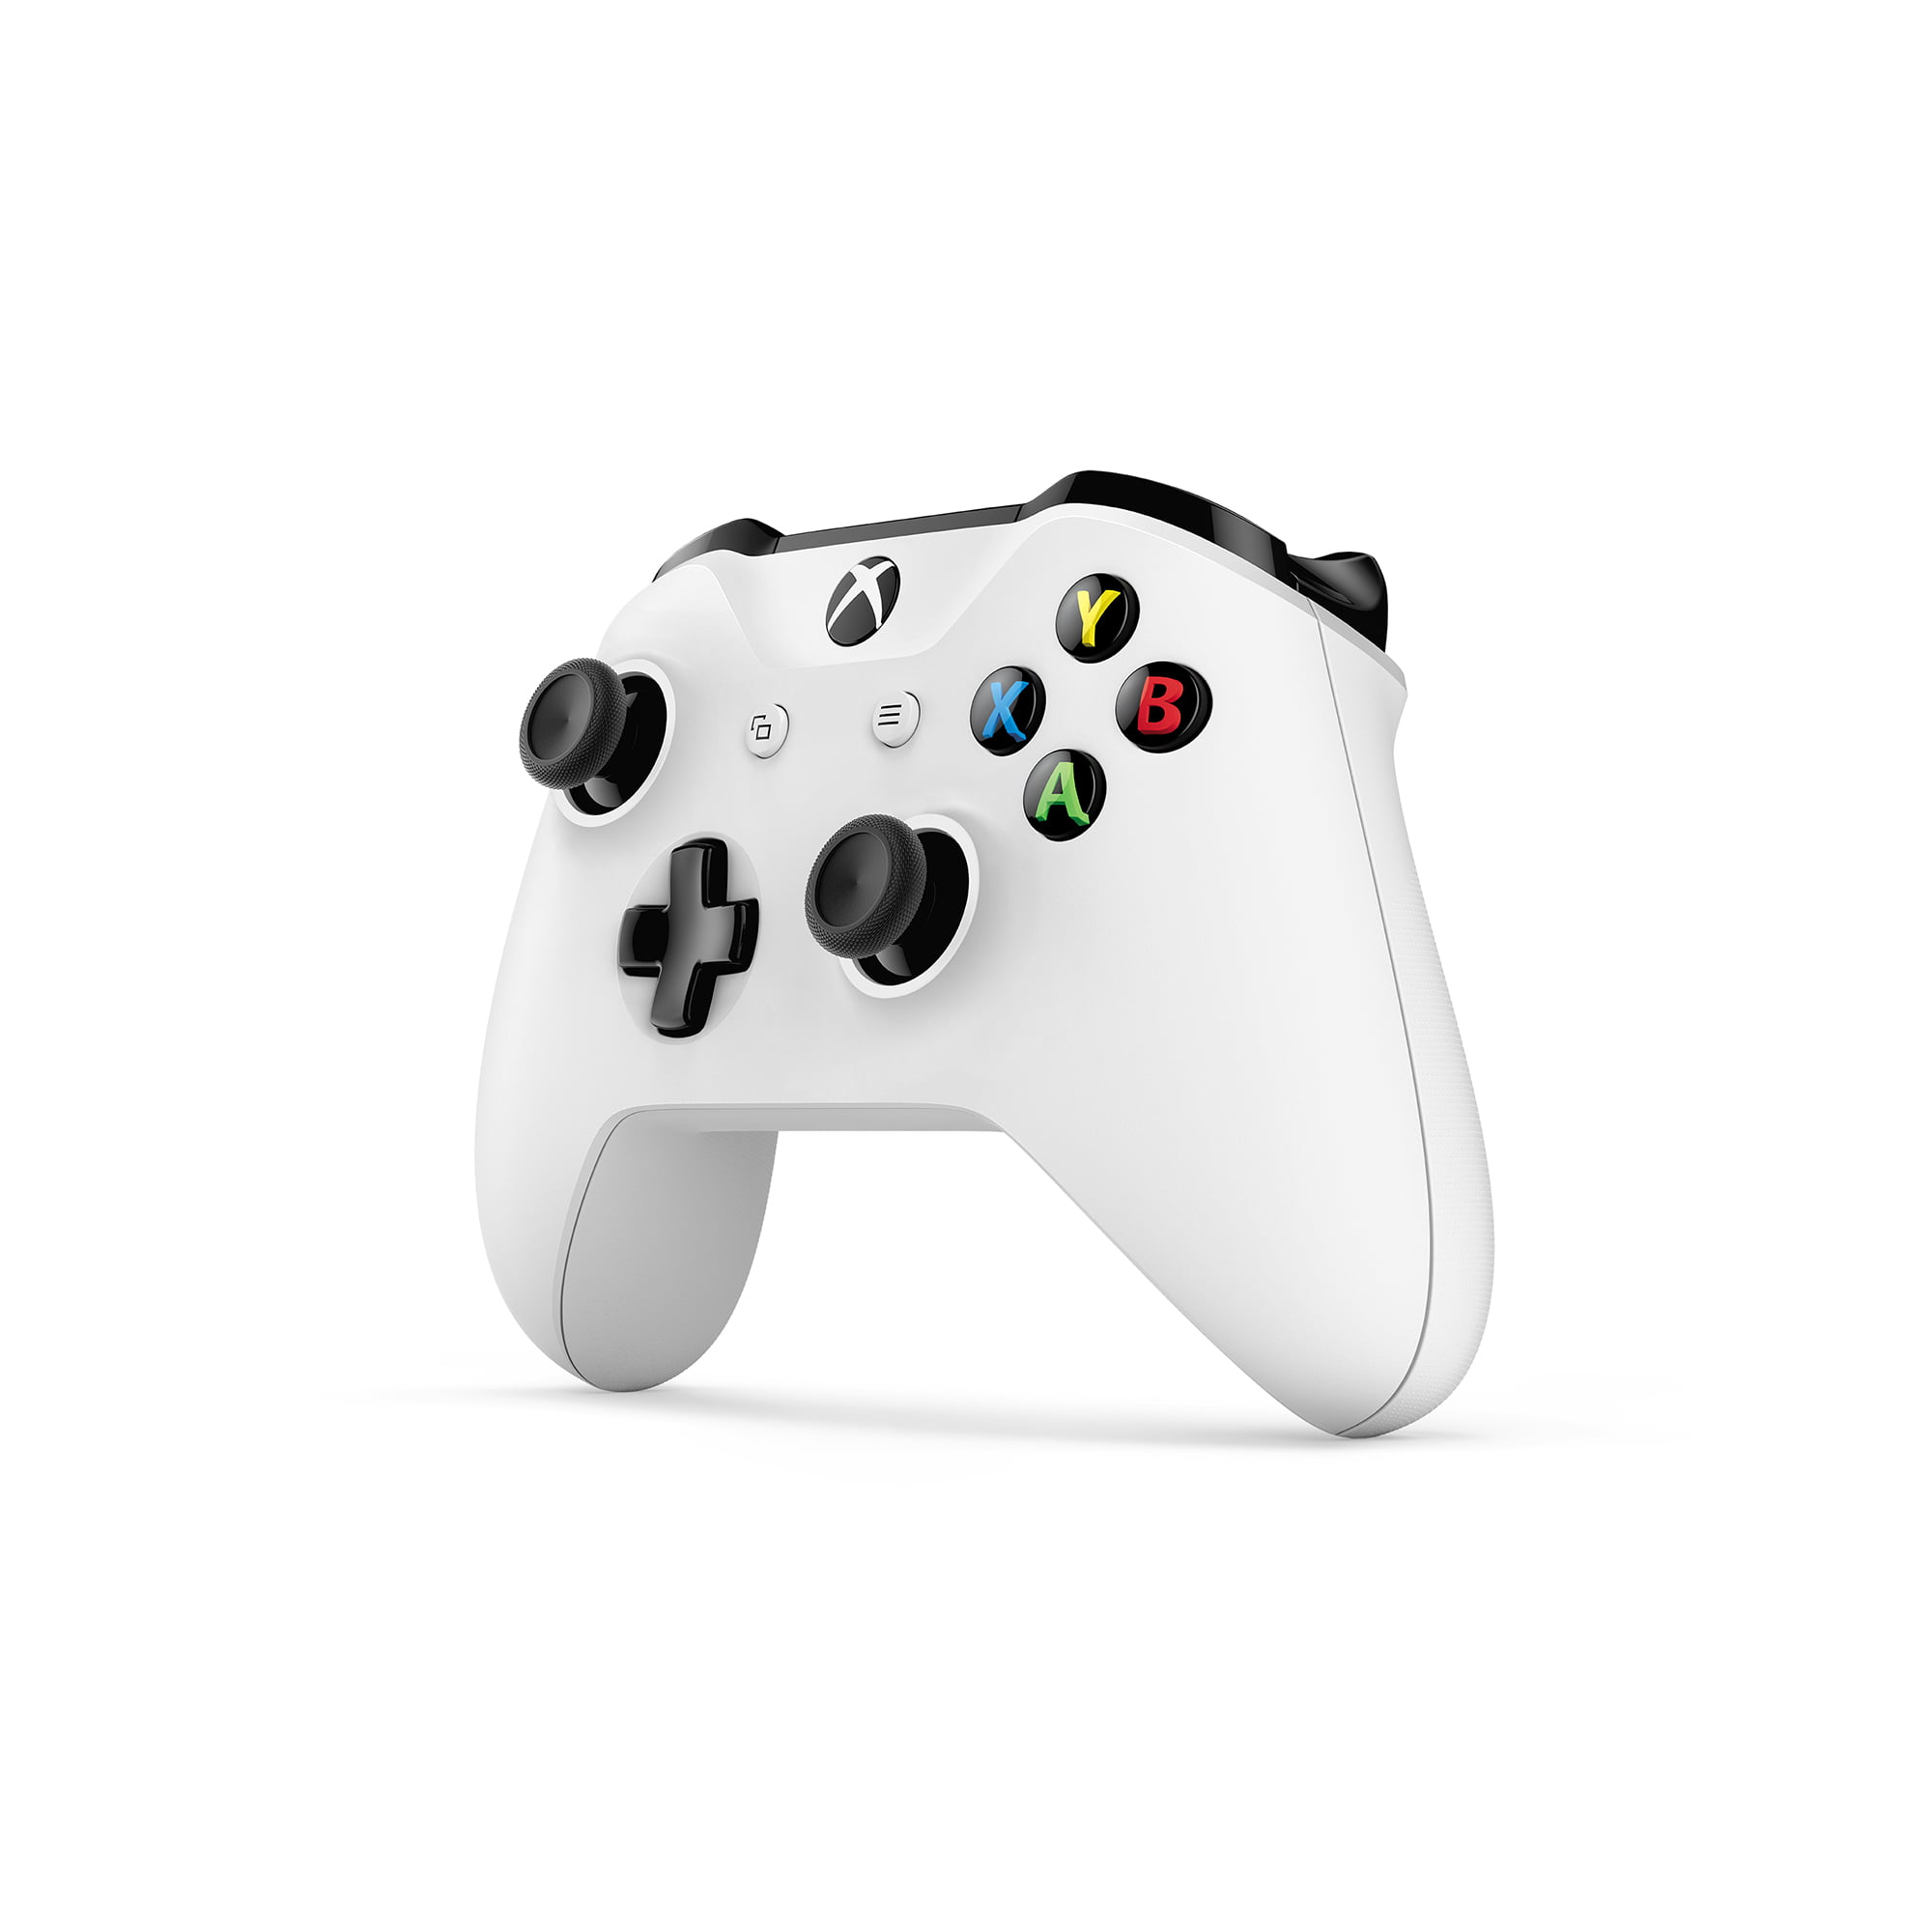 Microsoft Xbox One S 1TB Fortnite Console Bundle - White for sale online